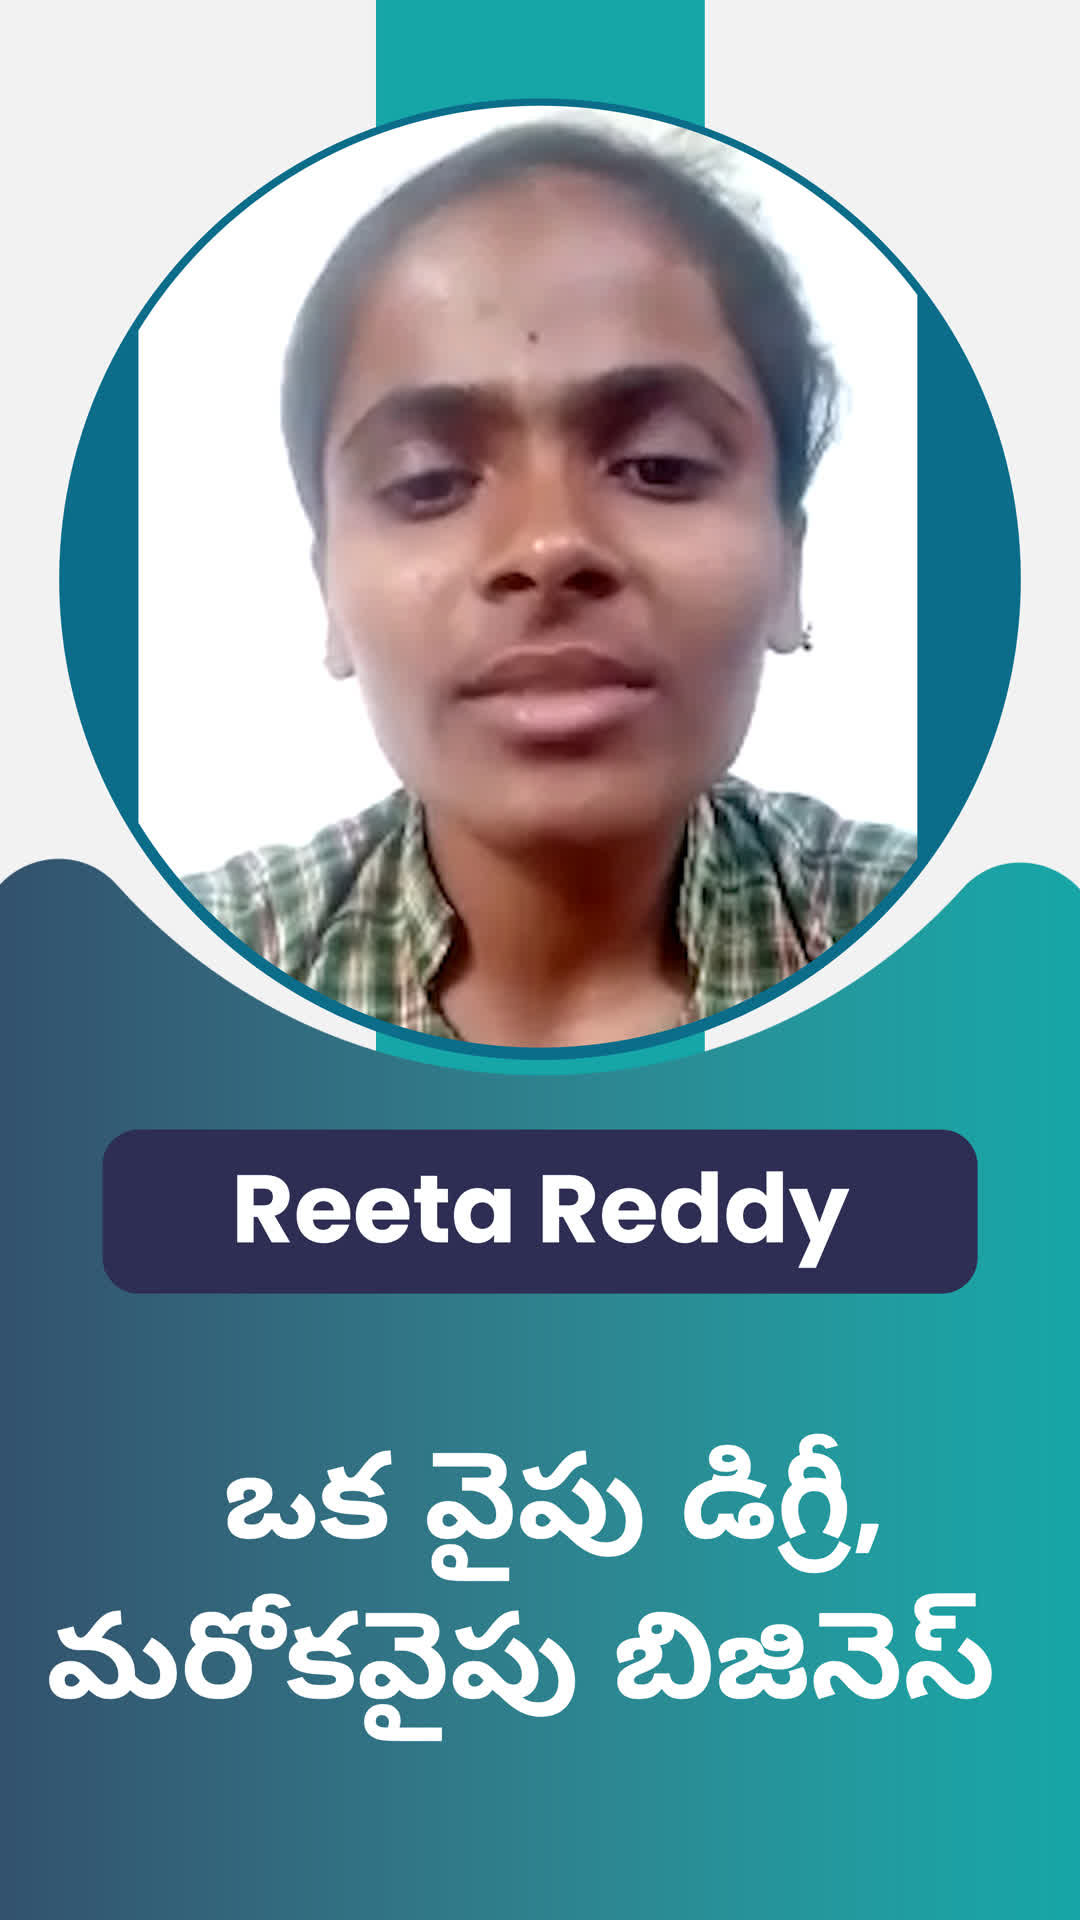 Reeta Reddy's Honest Review of ffreedom app - Bidar ,Karnataka